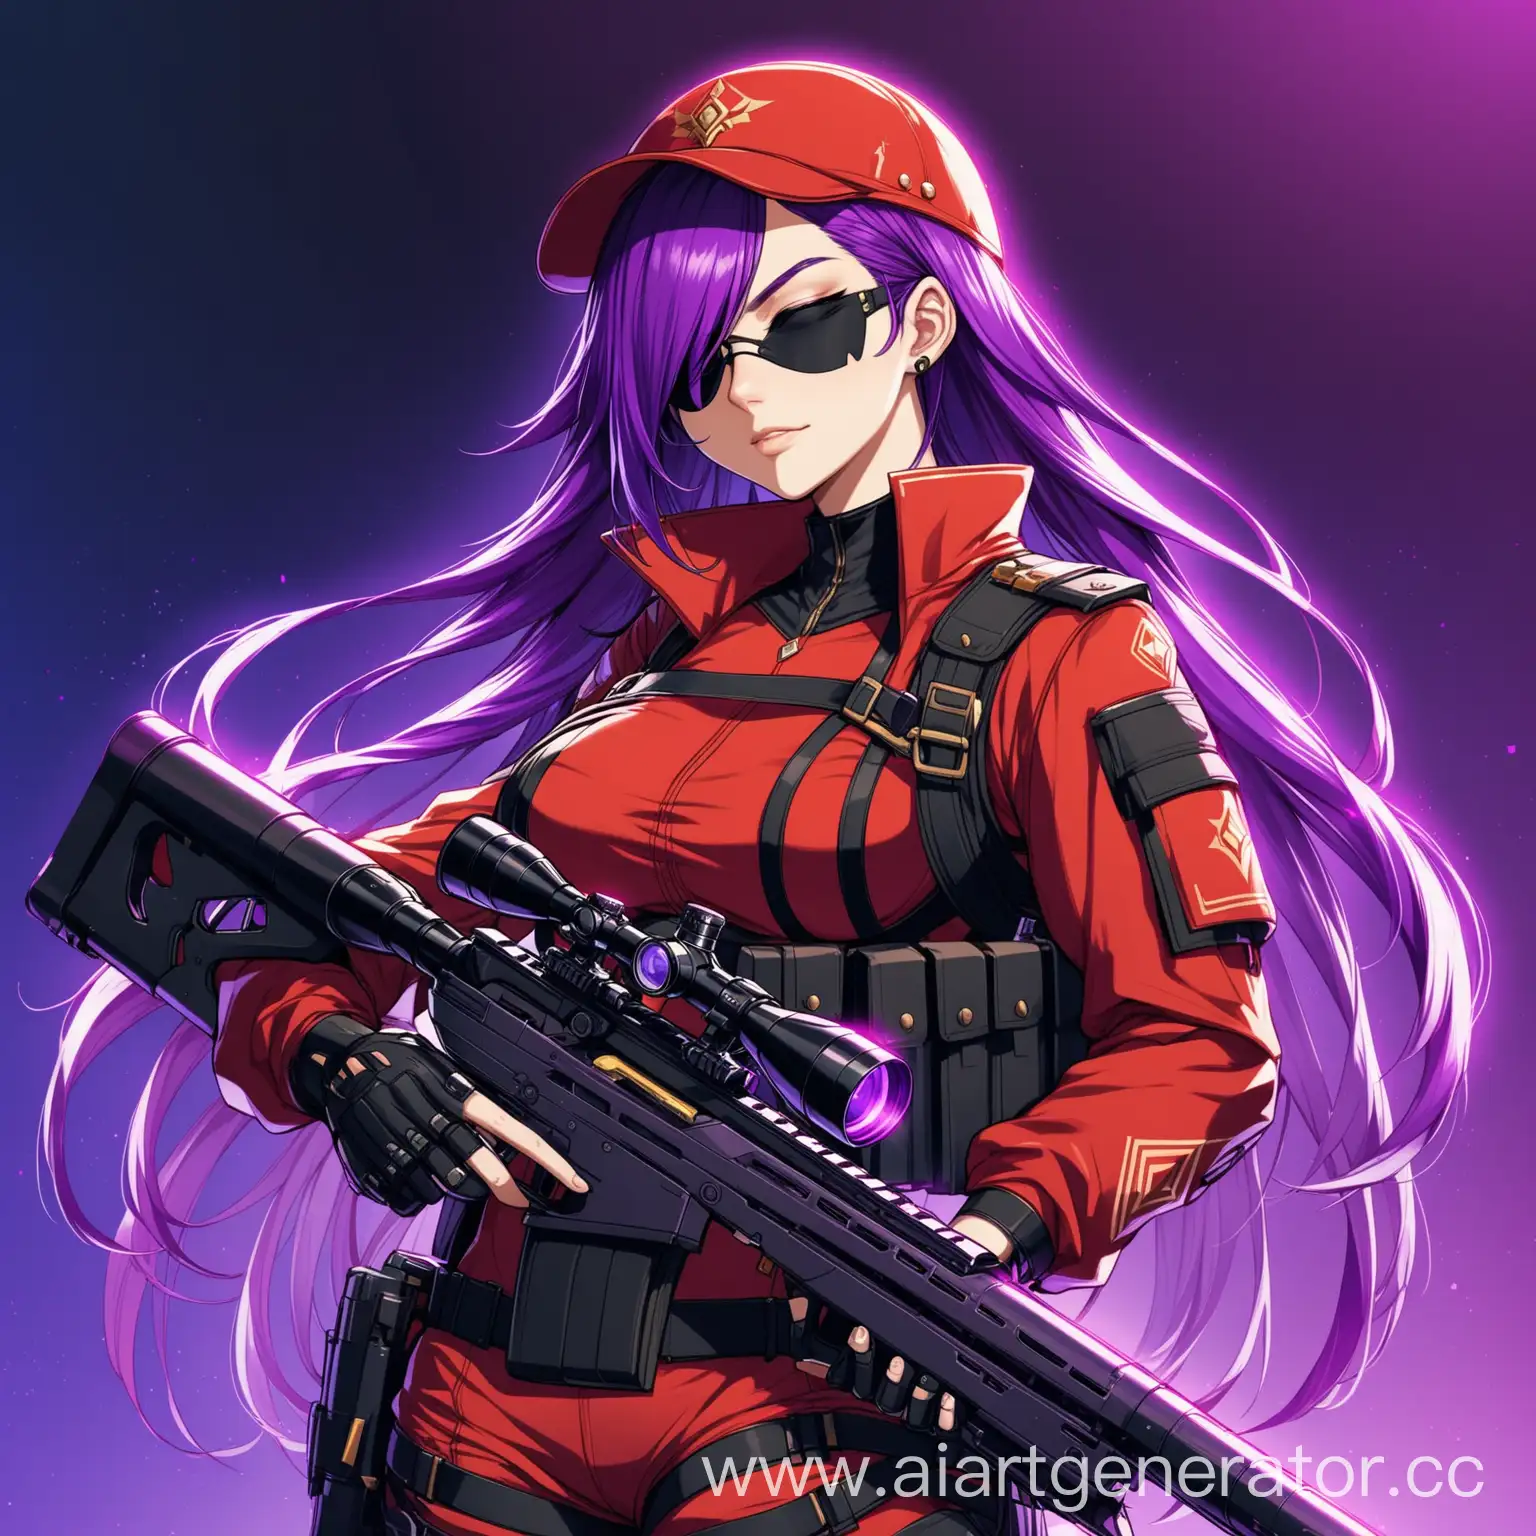 Cyberpunk-Sniper-Shevrez-with-Purple-Hair-and-Rifle